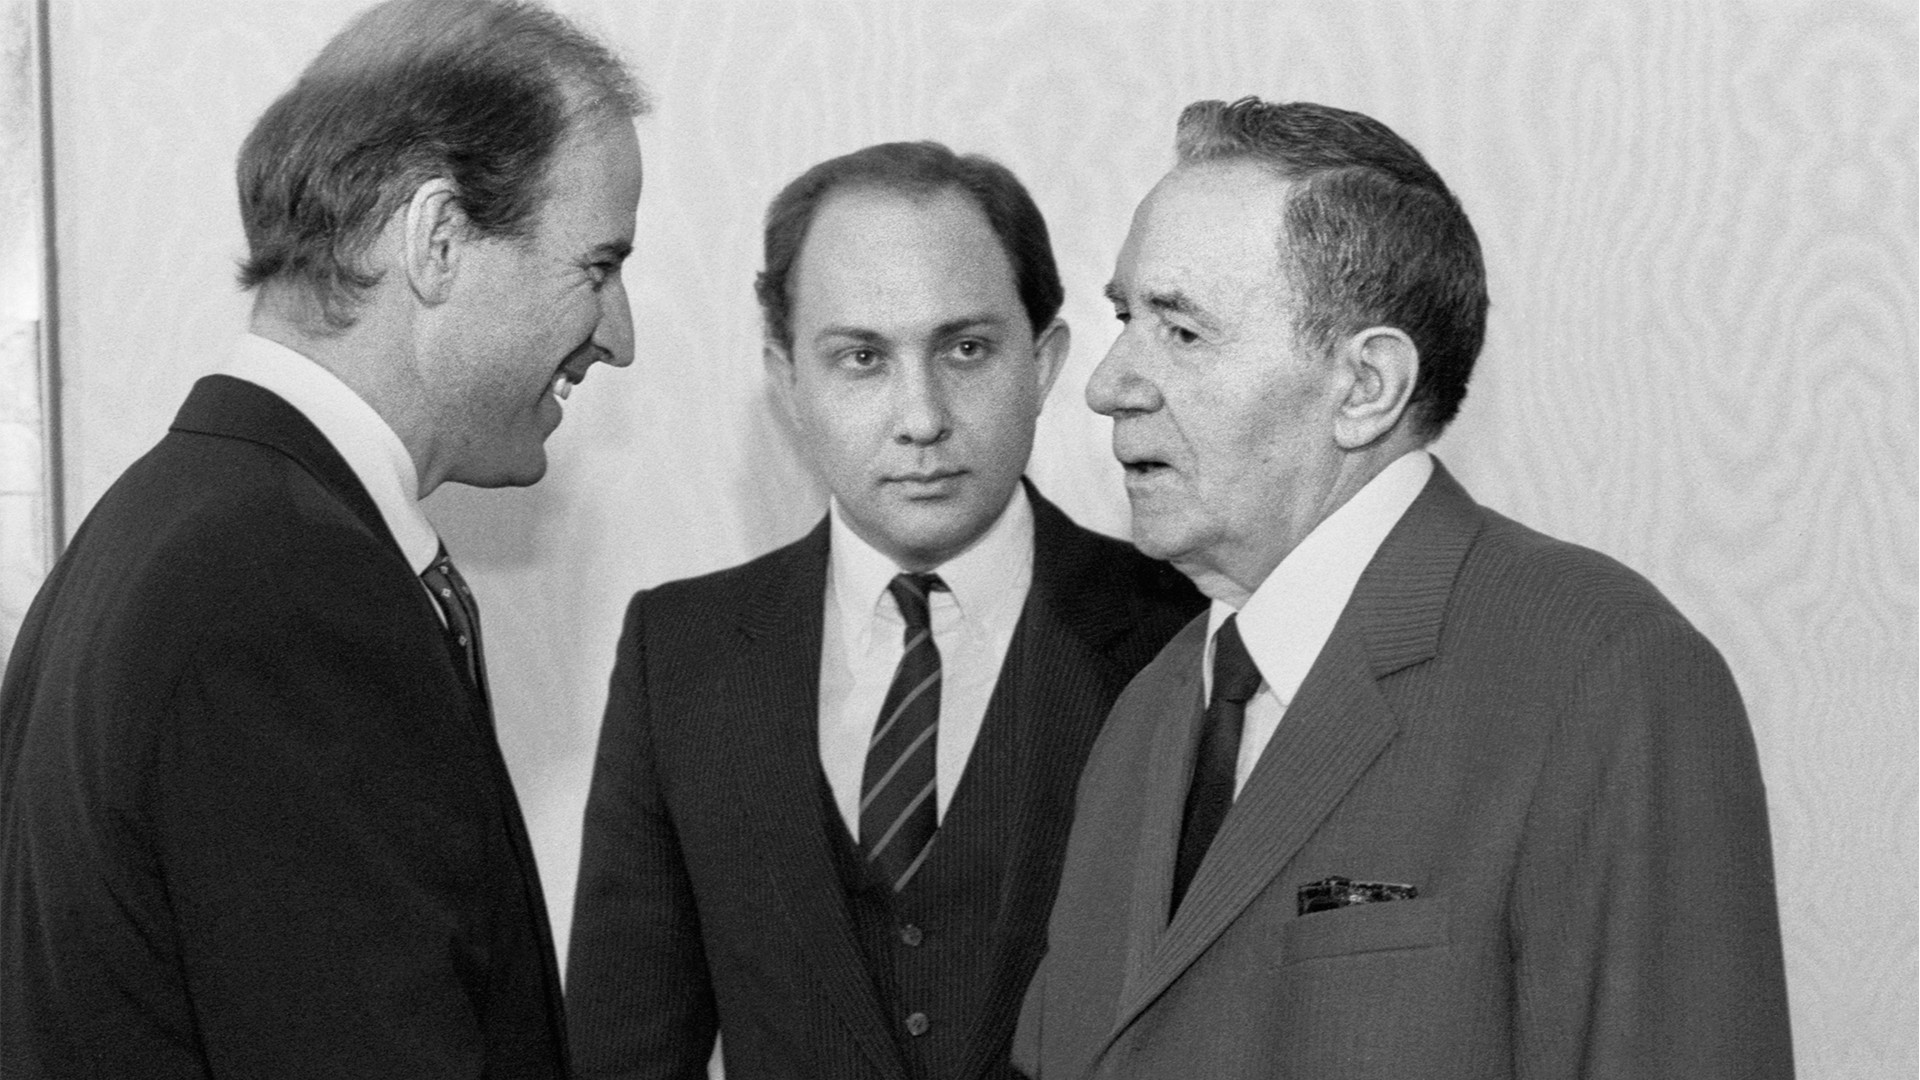 Джо Байдън, Виктор Прокофиев и Андрей Громико, 1988 г.
